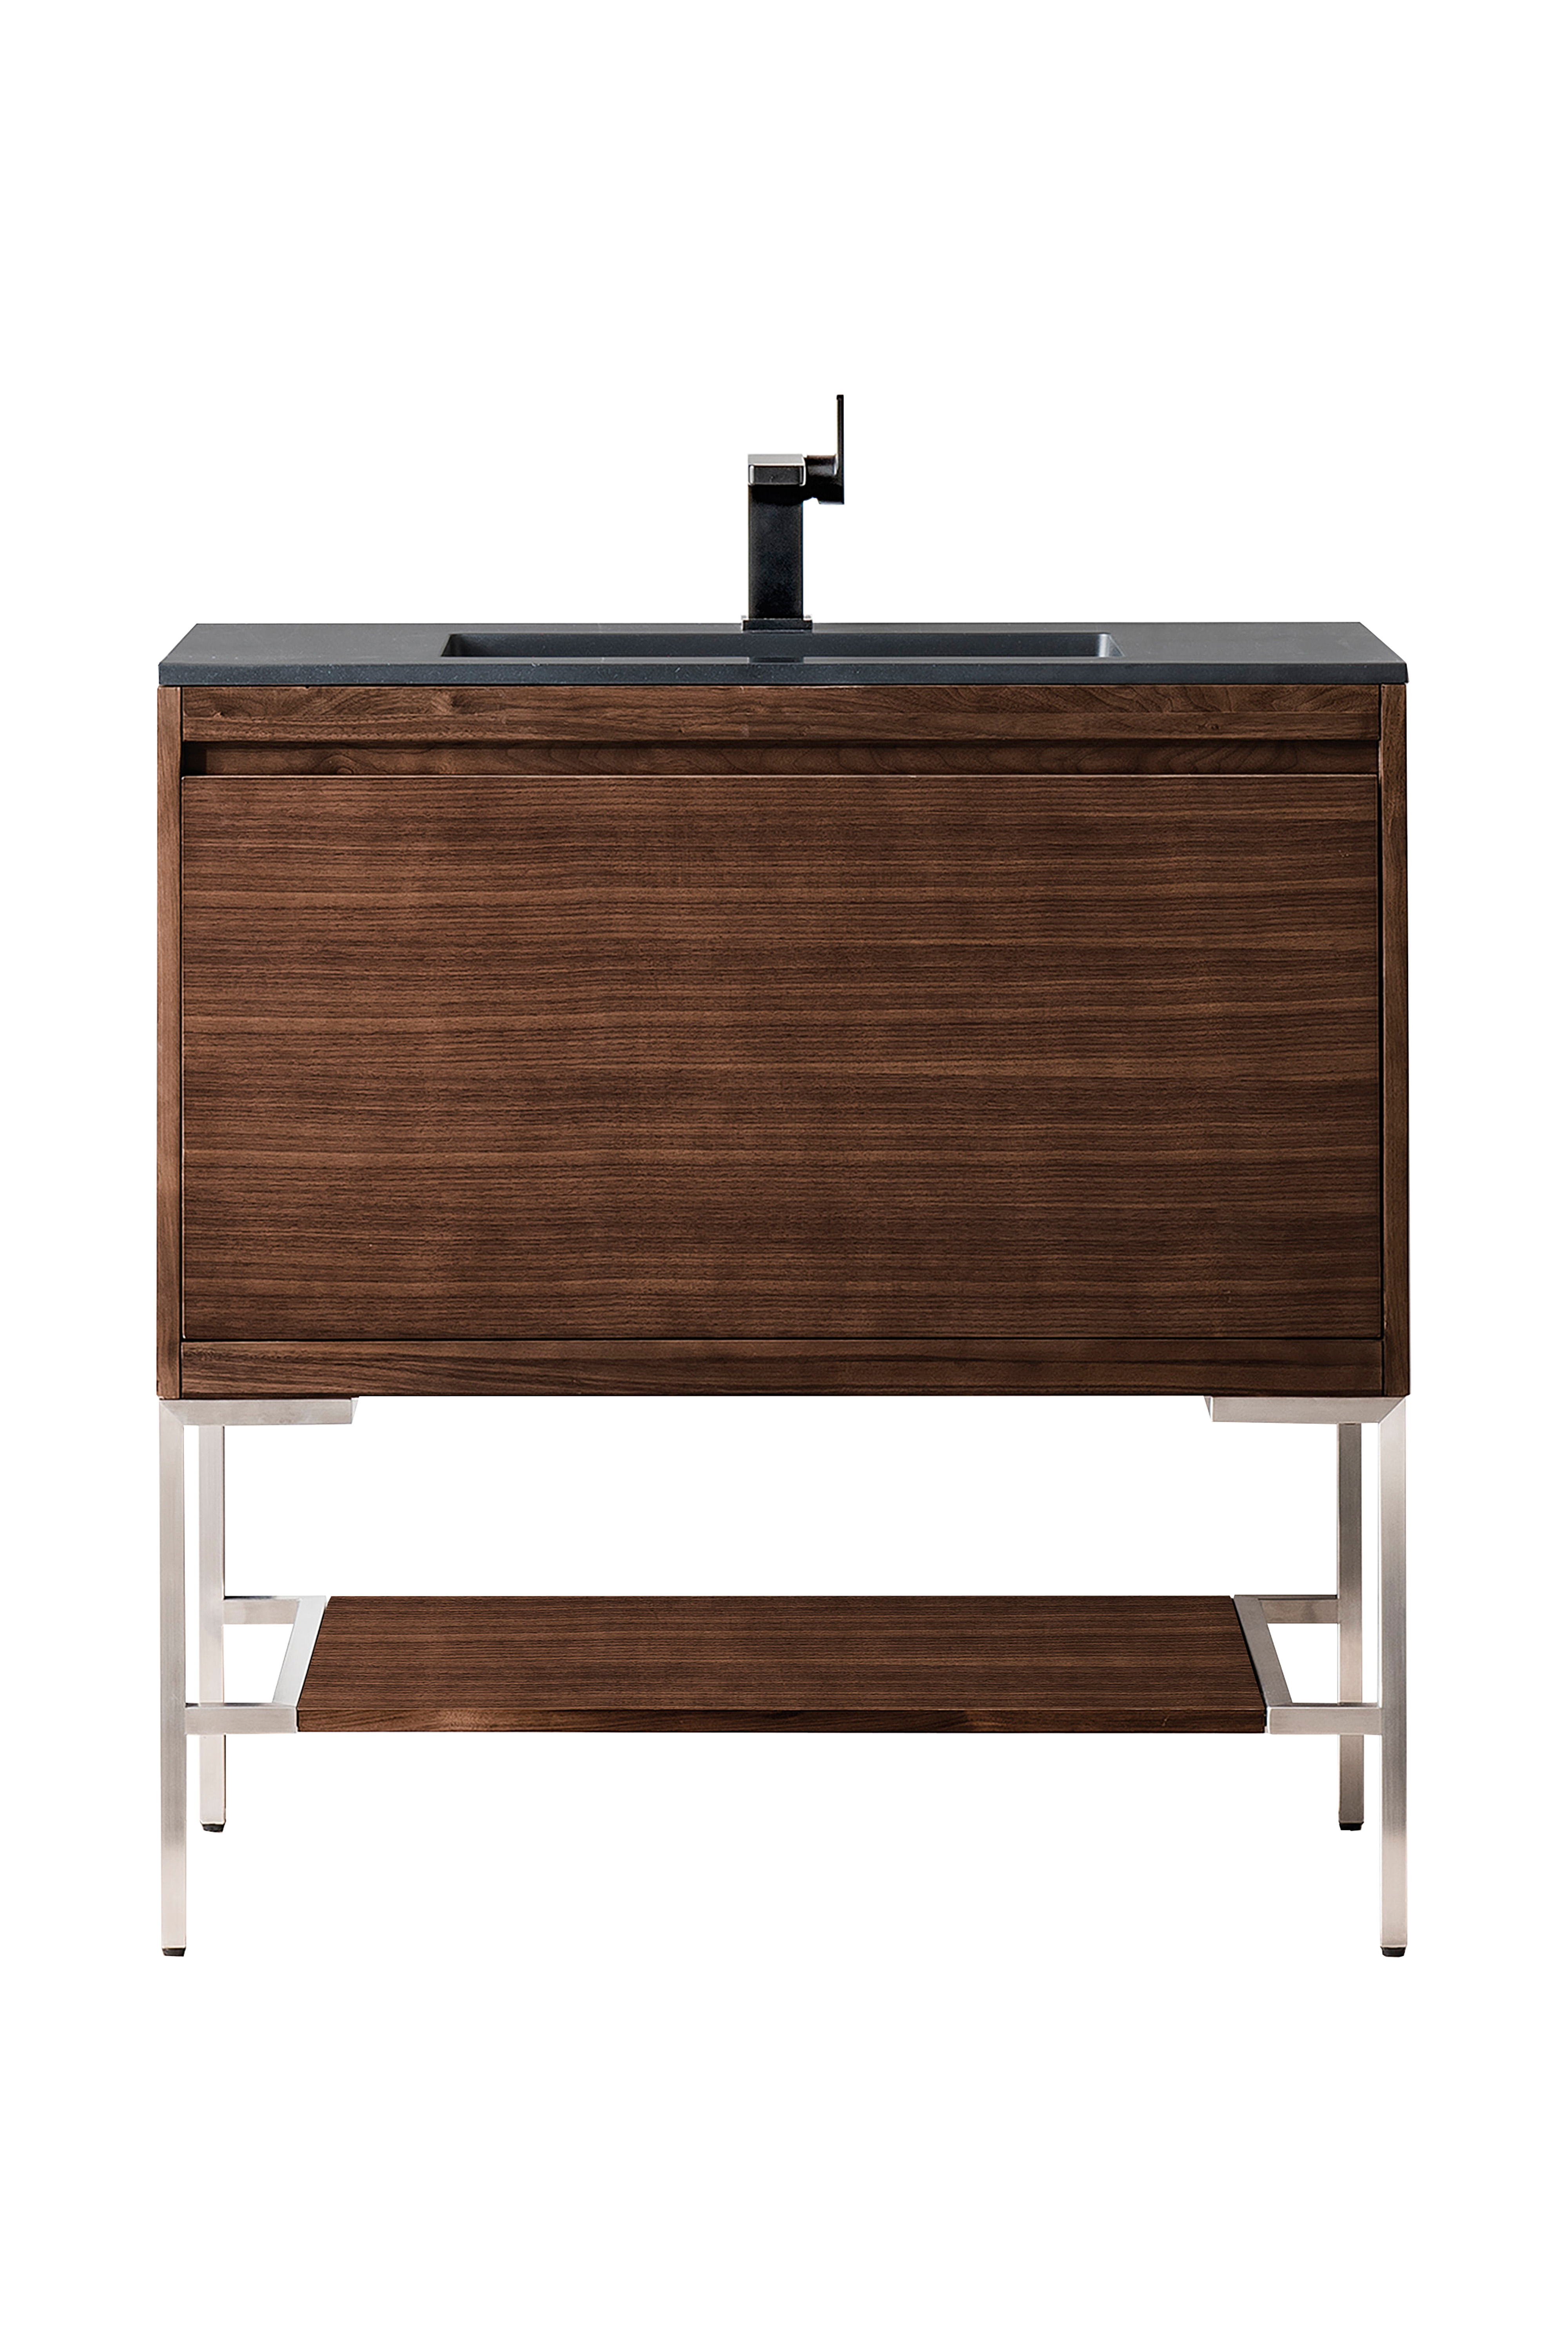 James Martin 801V35.4WLTBNKCHB Milan 35.4" Single Vanity Cabinet, Mid Century Walnut, Brushed Nickel w/Charcoal Black Composite Top